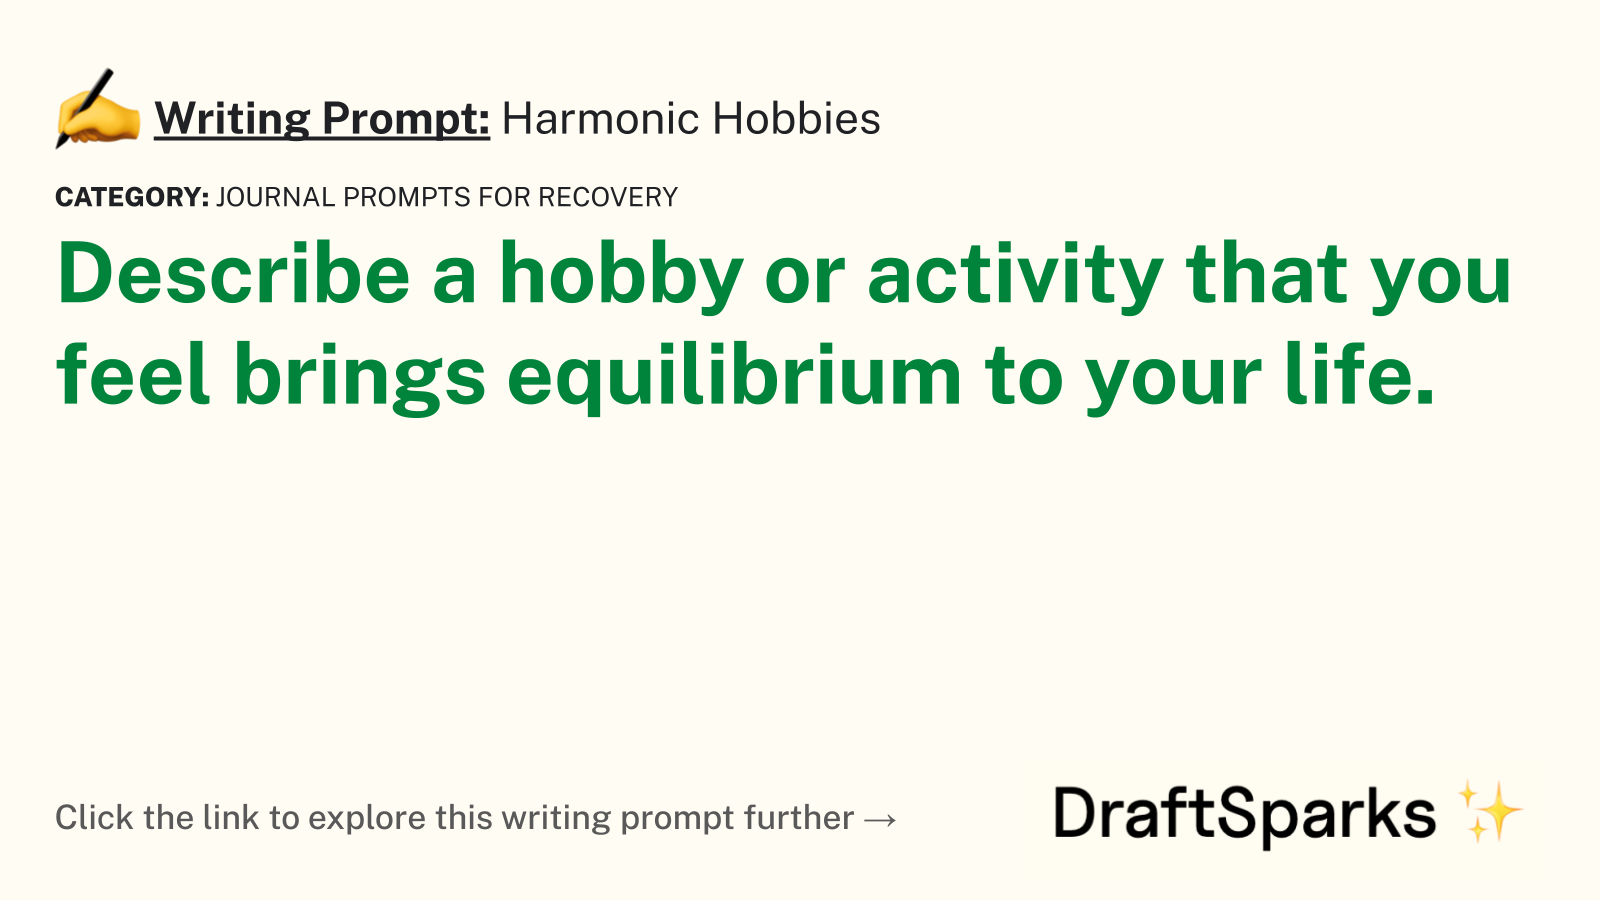 Harmonic Hobbies